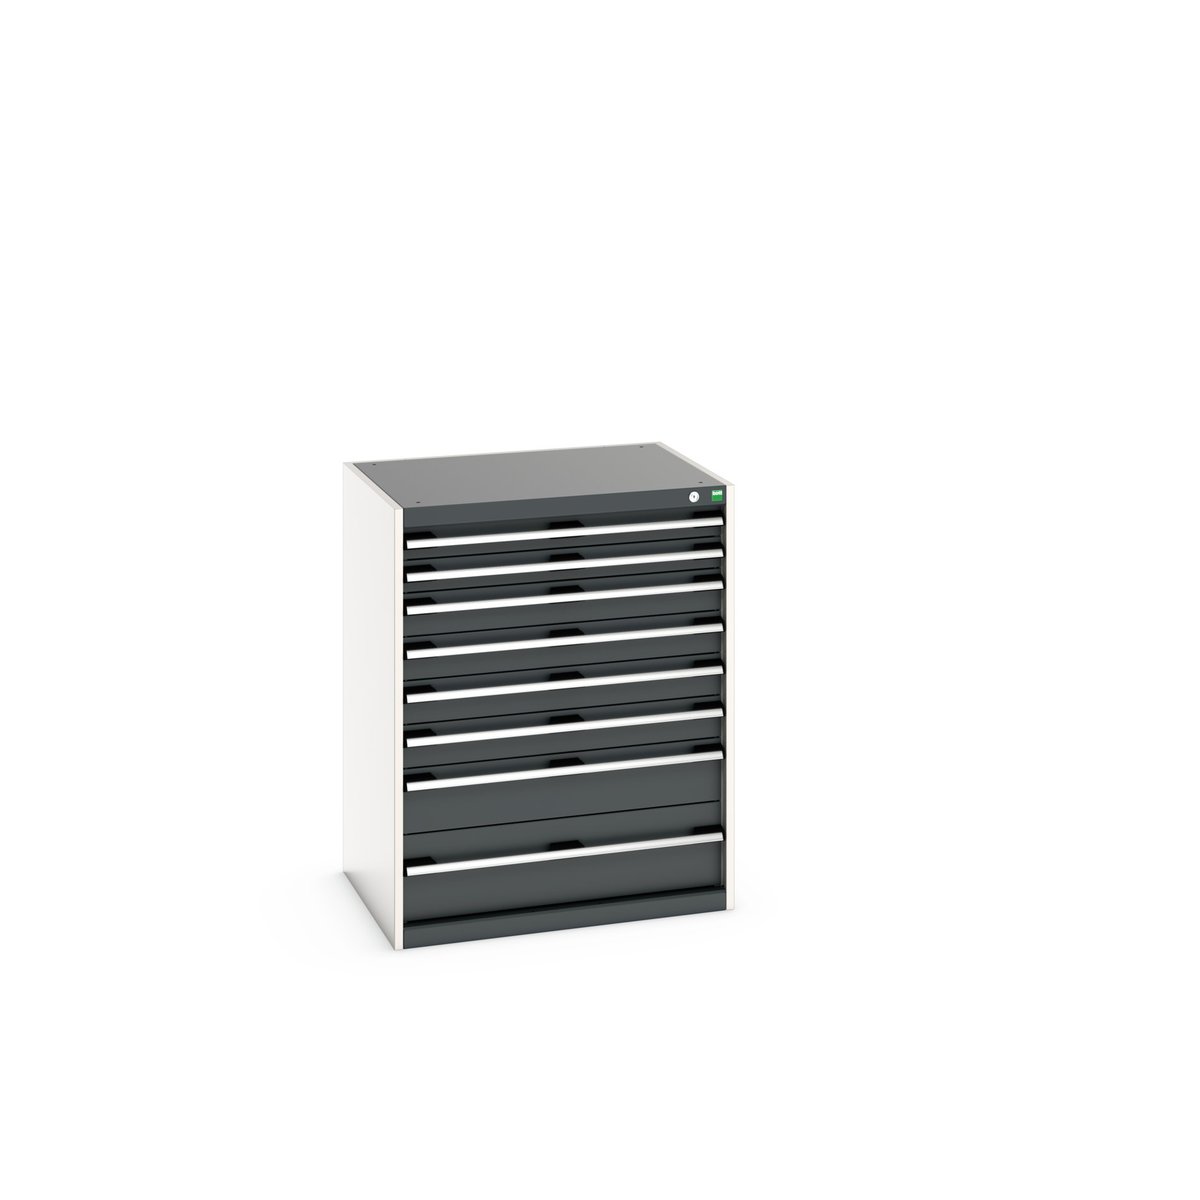 40020142. - cubio drawer cabinet